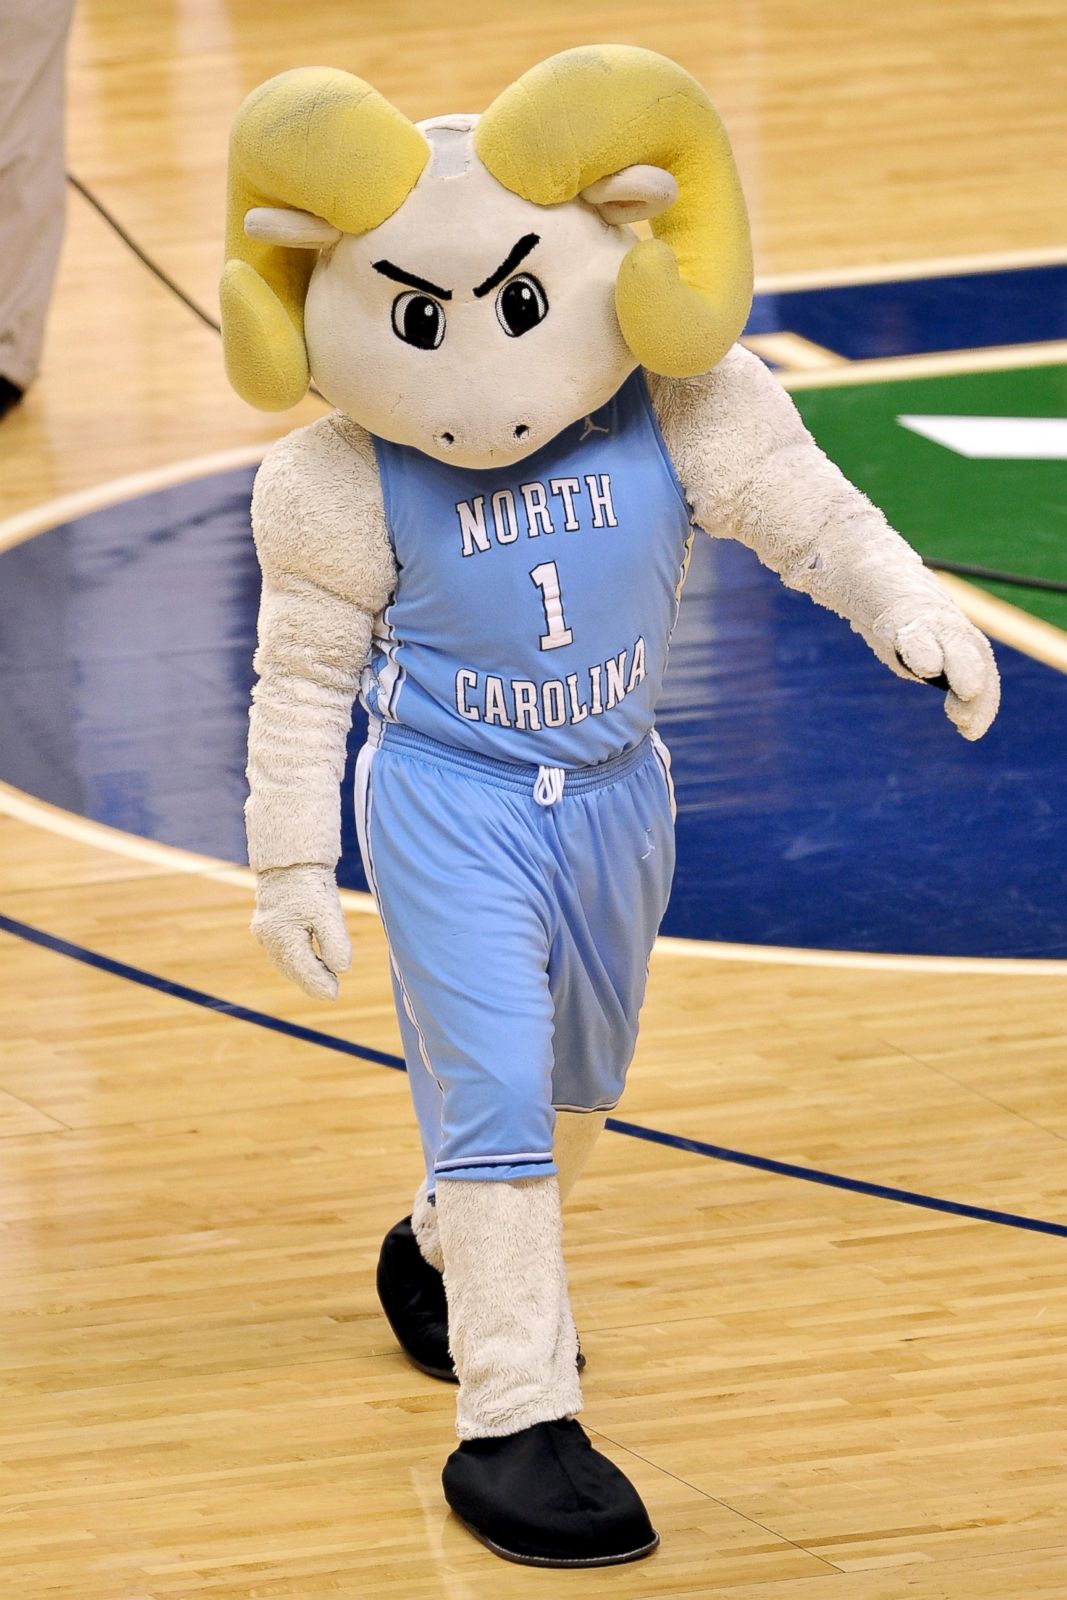 College Basketball Mascots Photos - ABC News